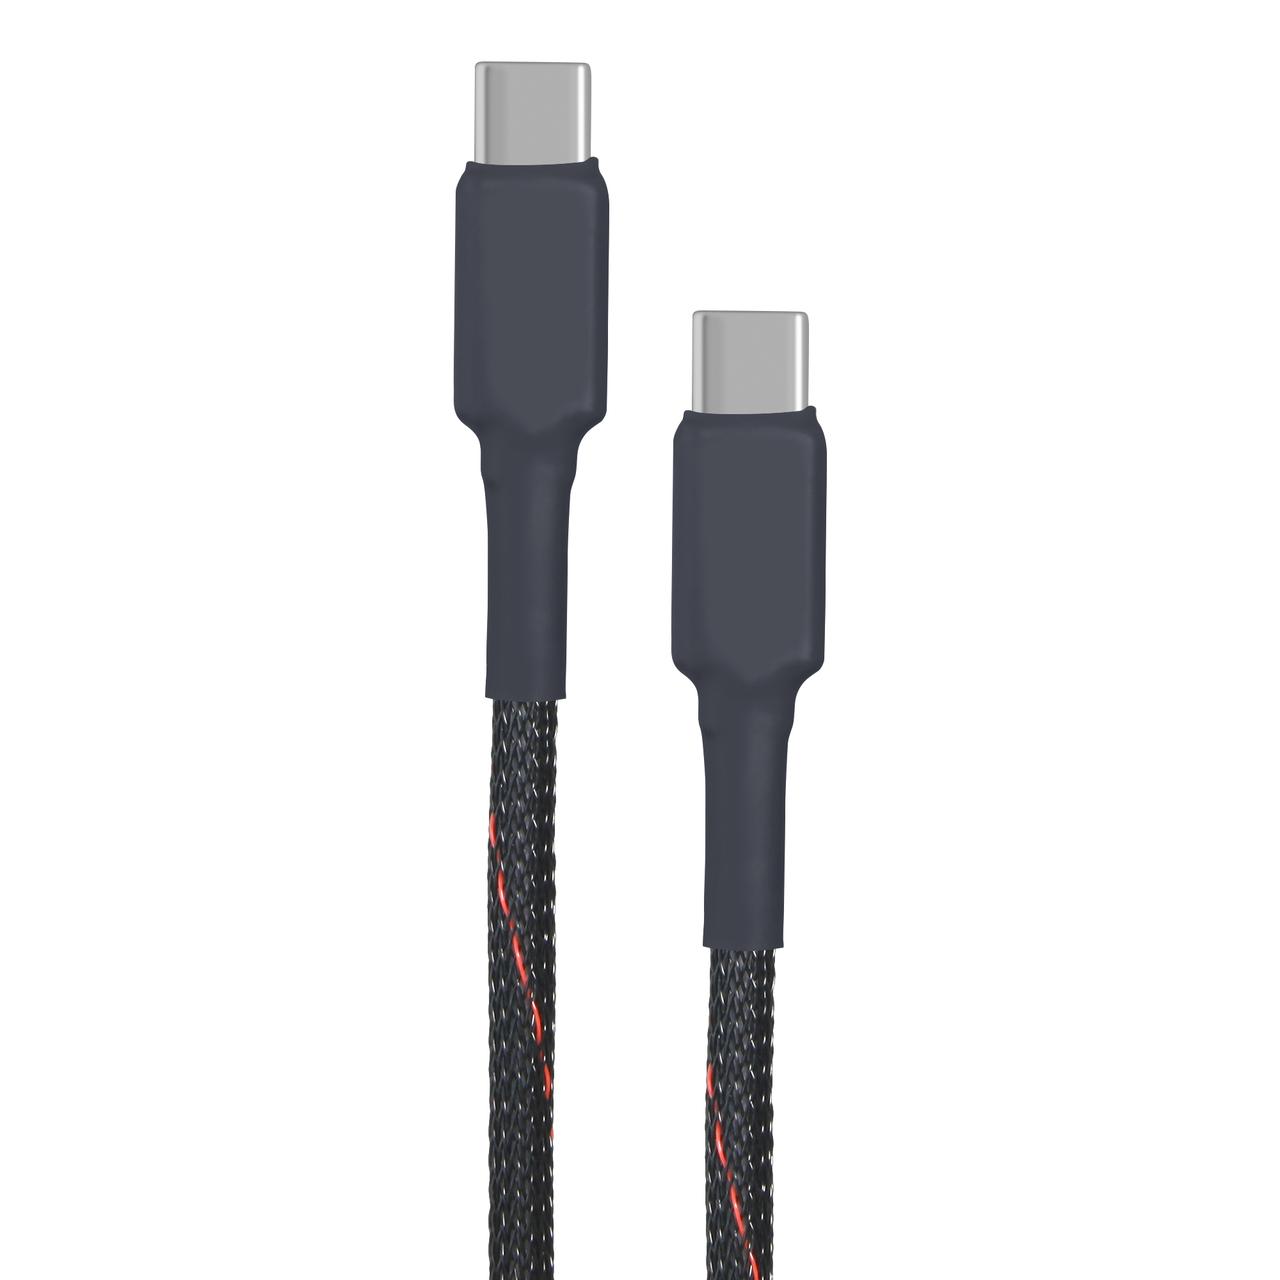 cable salad 100 W Ladekabel USB-C zu USB-C für Laptop & Smartphone